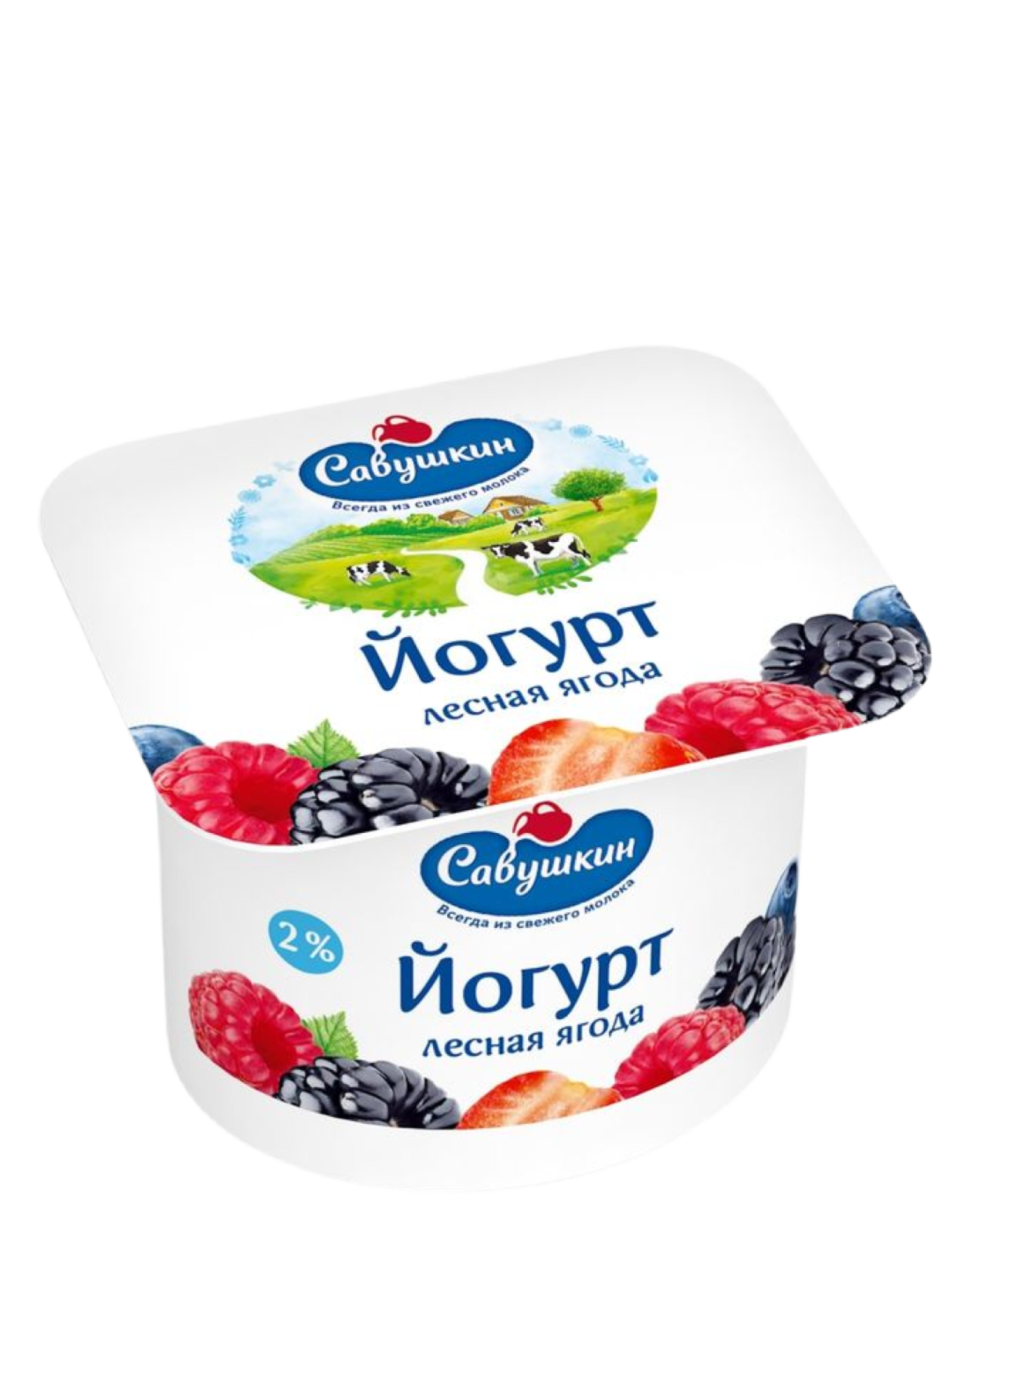 Йогурт Савушкин 2% лесная ягода бзмж 120г